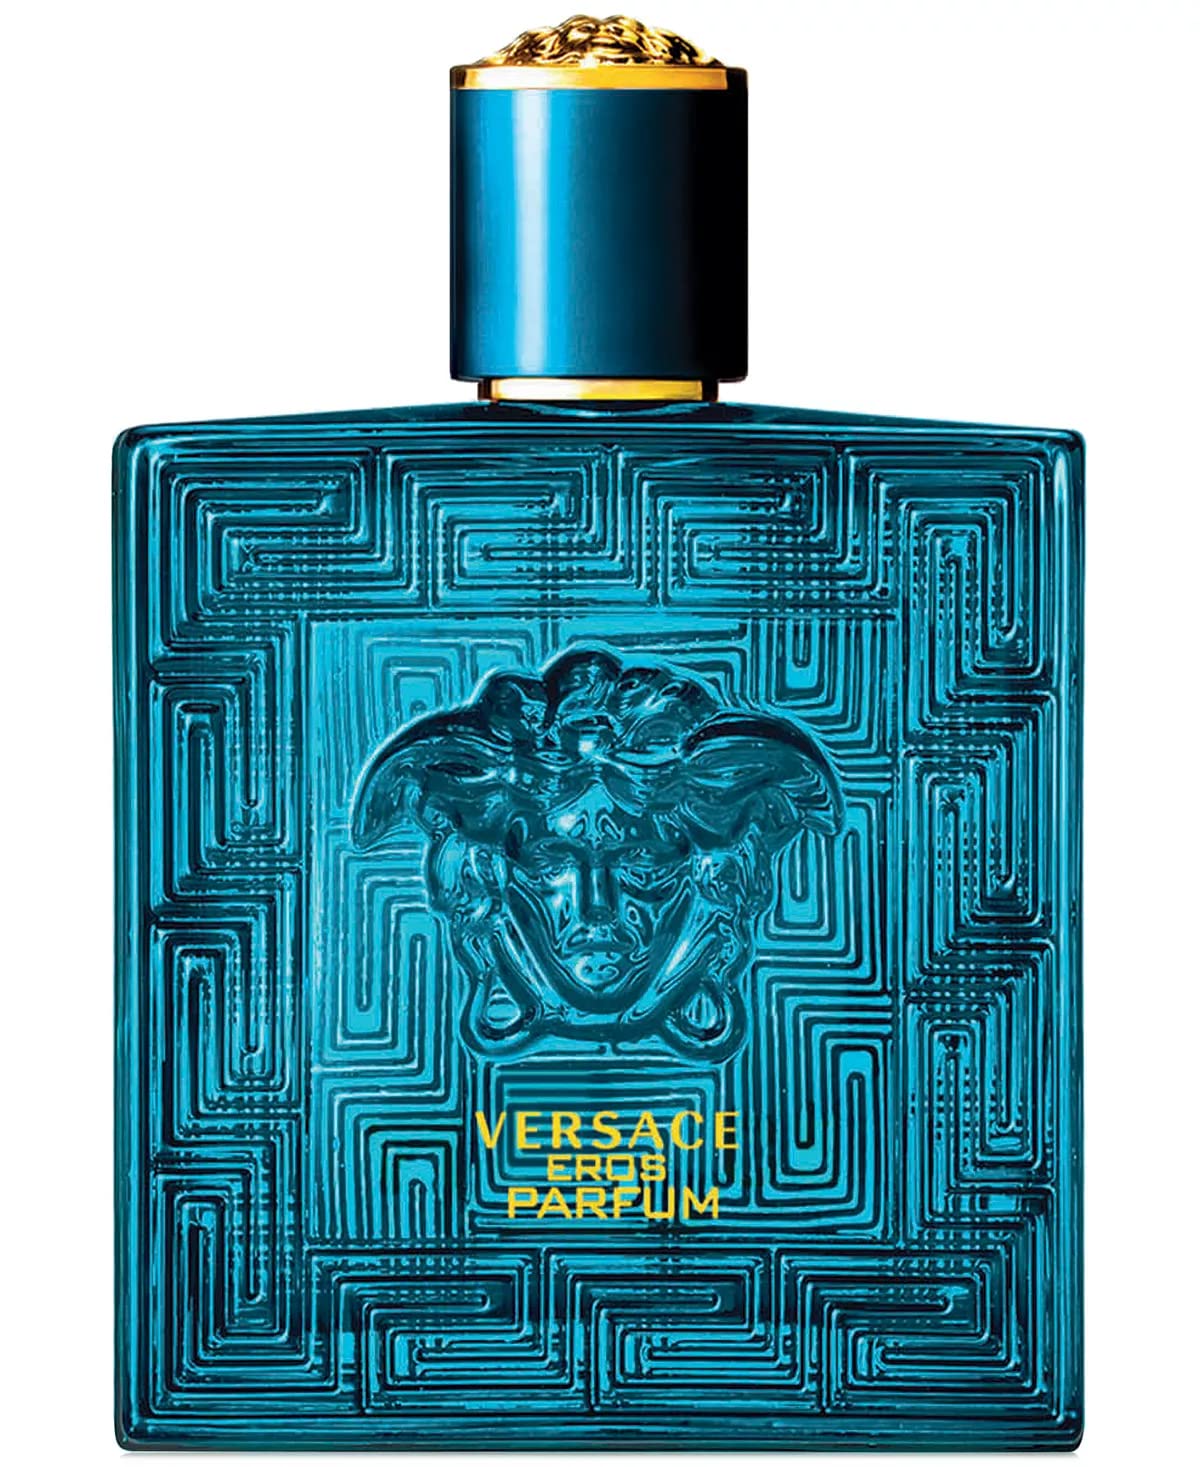 Chanel Blue Perfume For Men WholeSale - Price List, Bulk Buy at